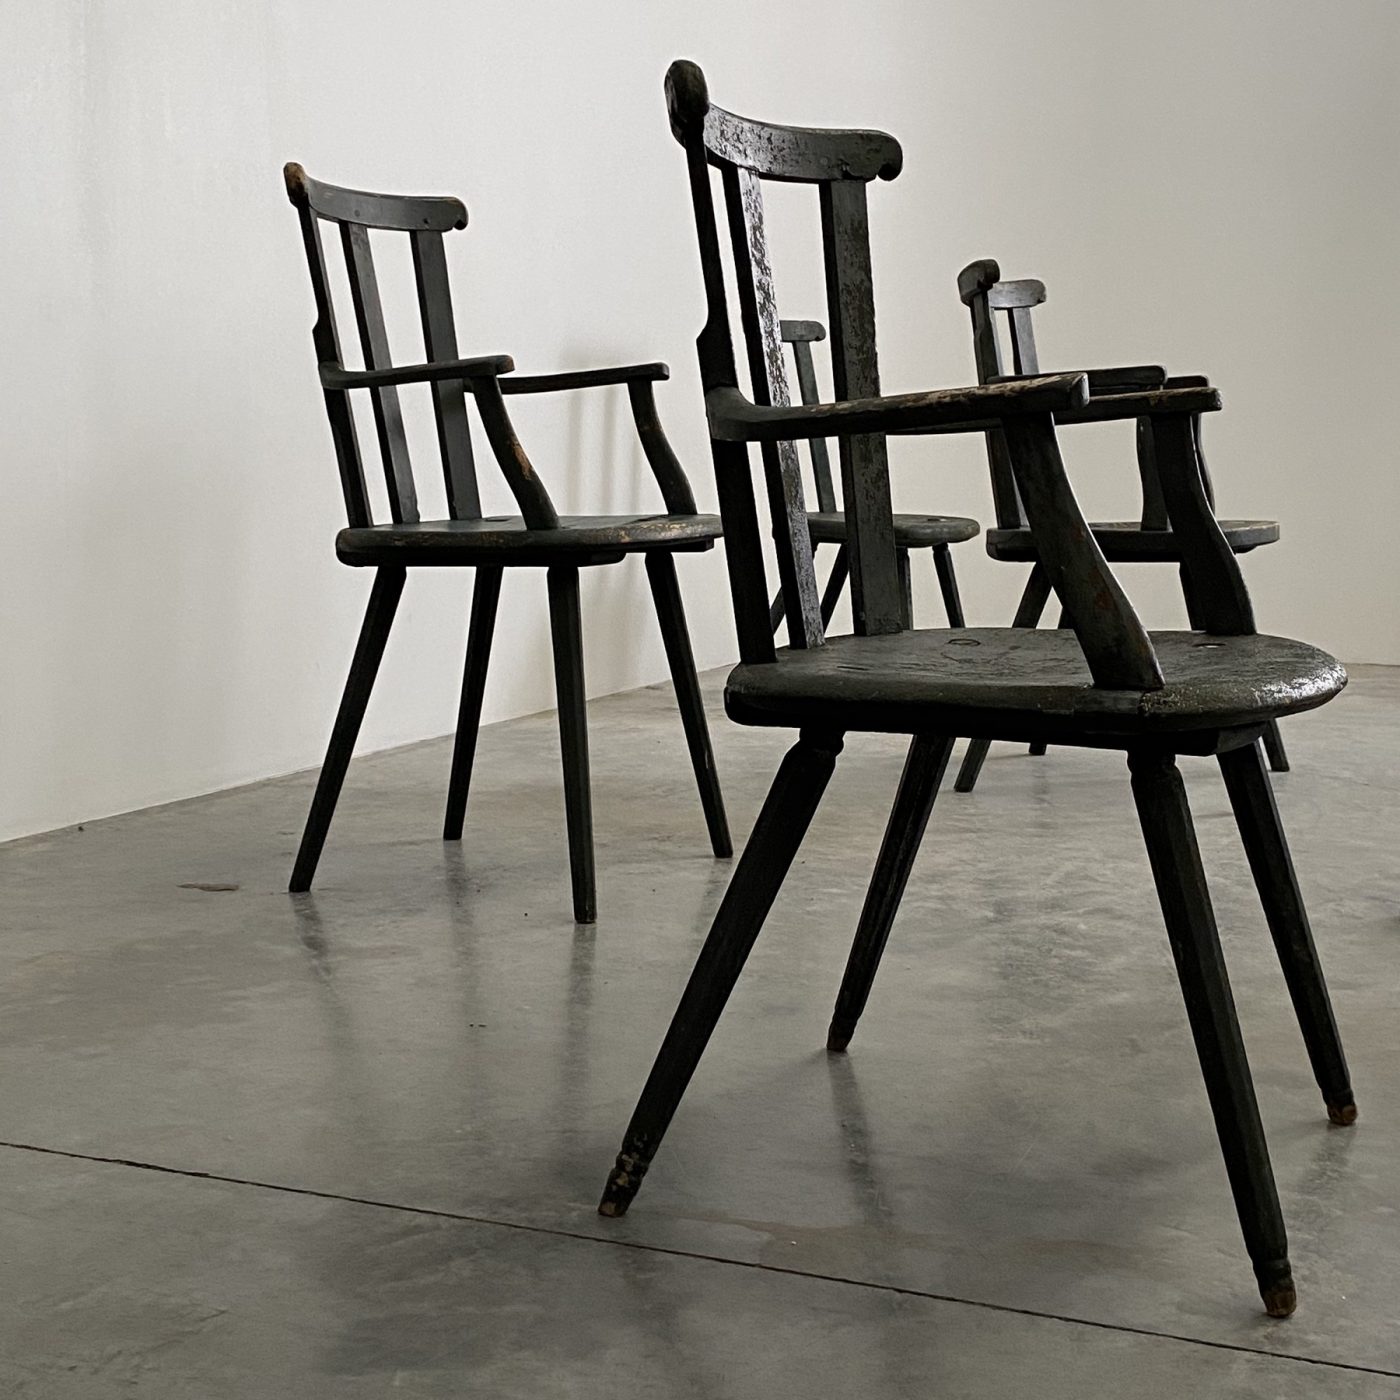 objet-vagabond-painted-chairs0007